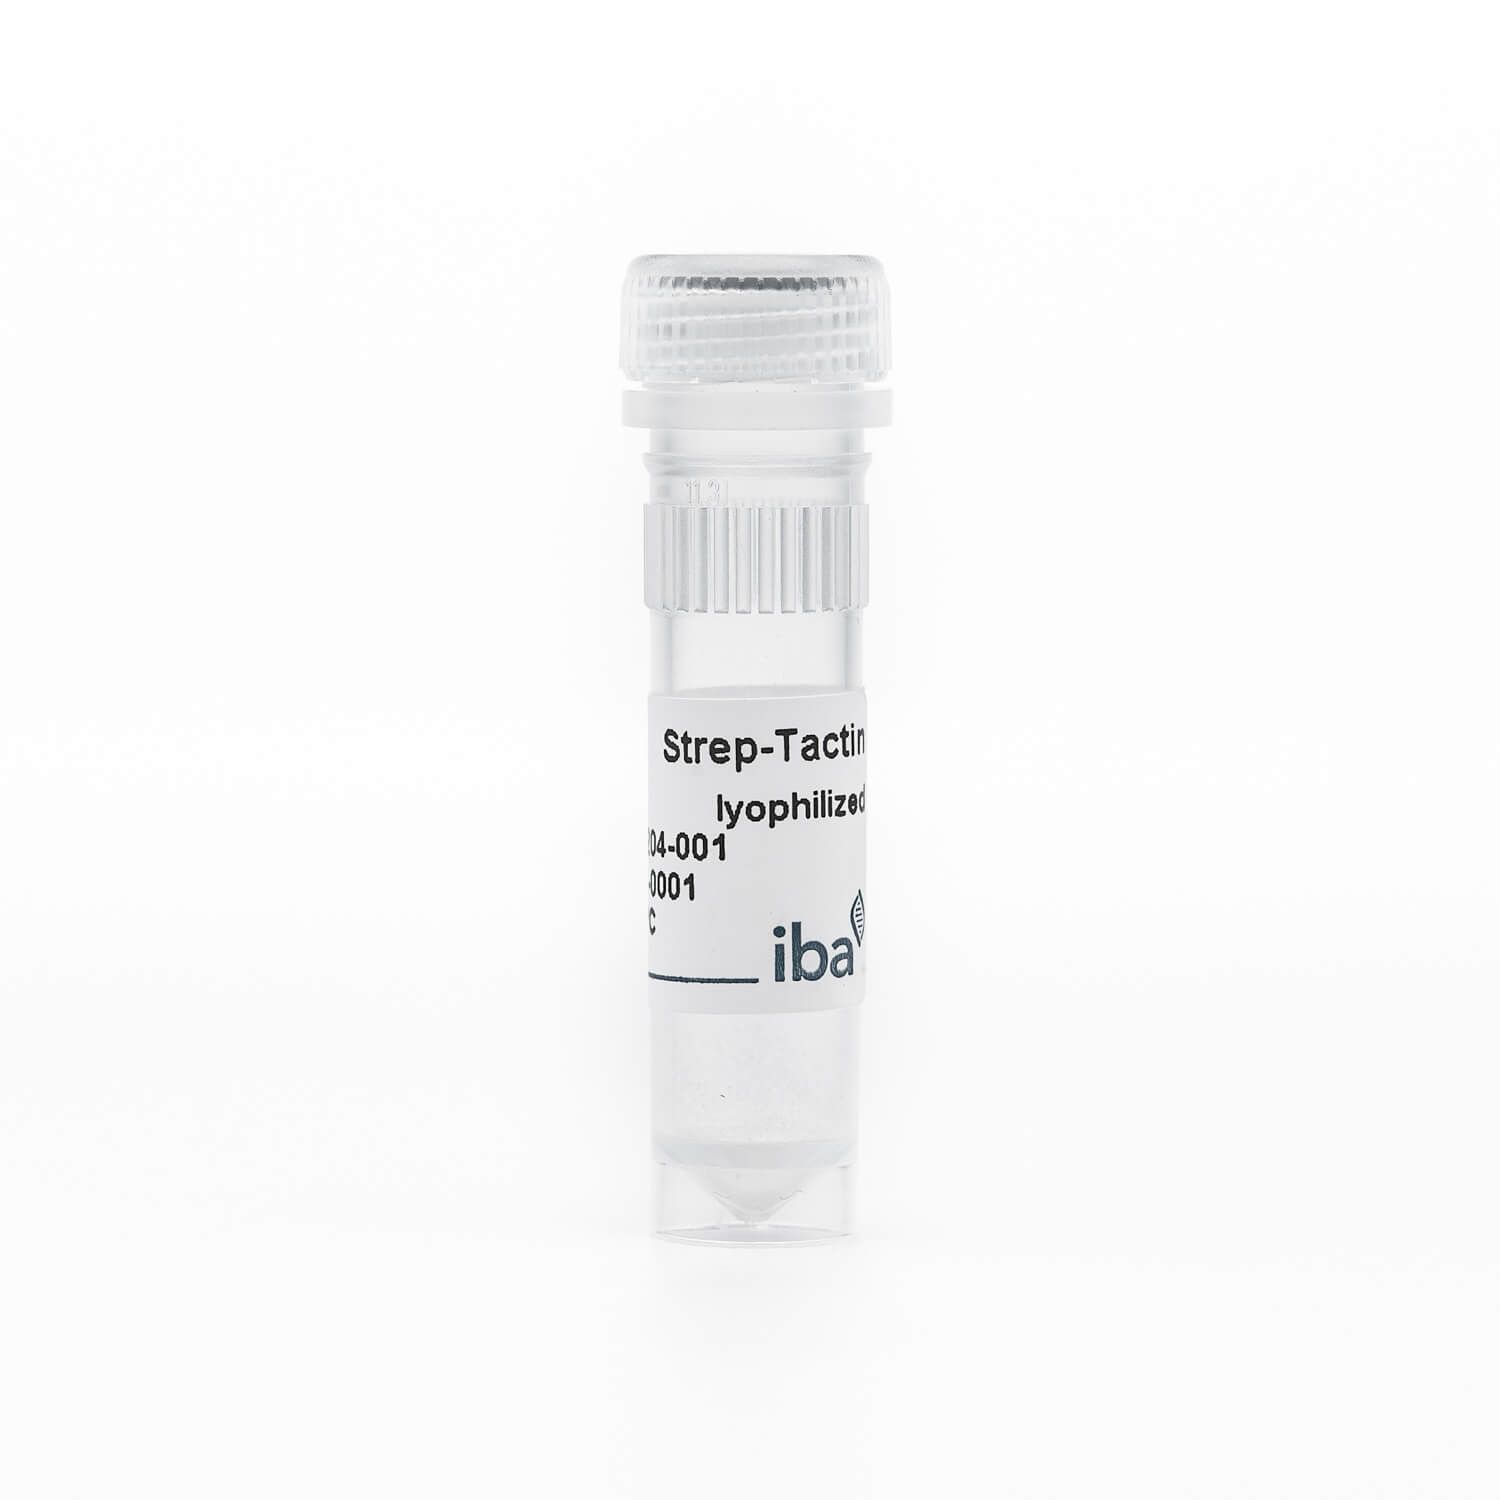 Strep-Tactin®, lyophilized 